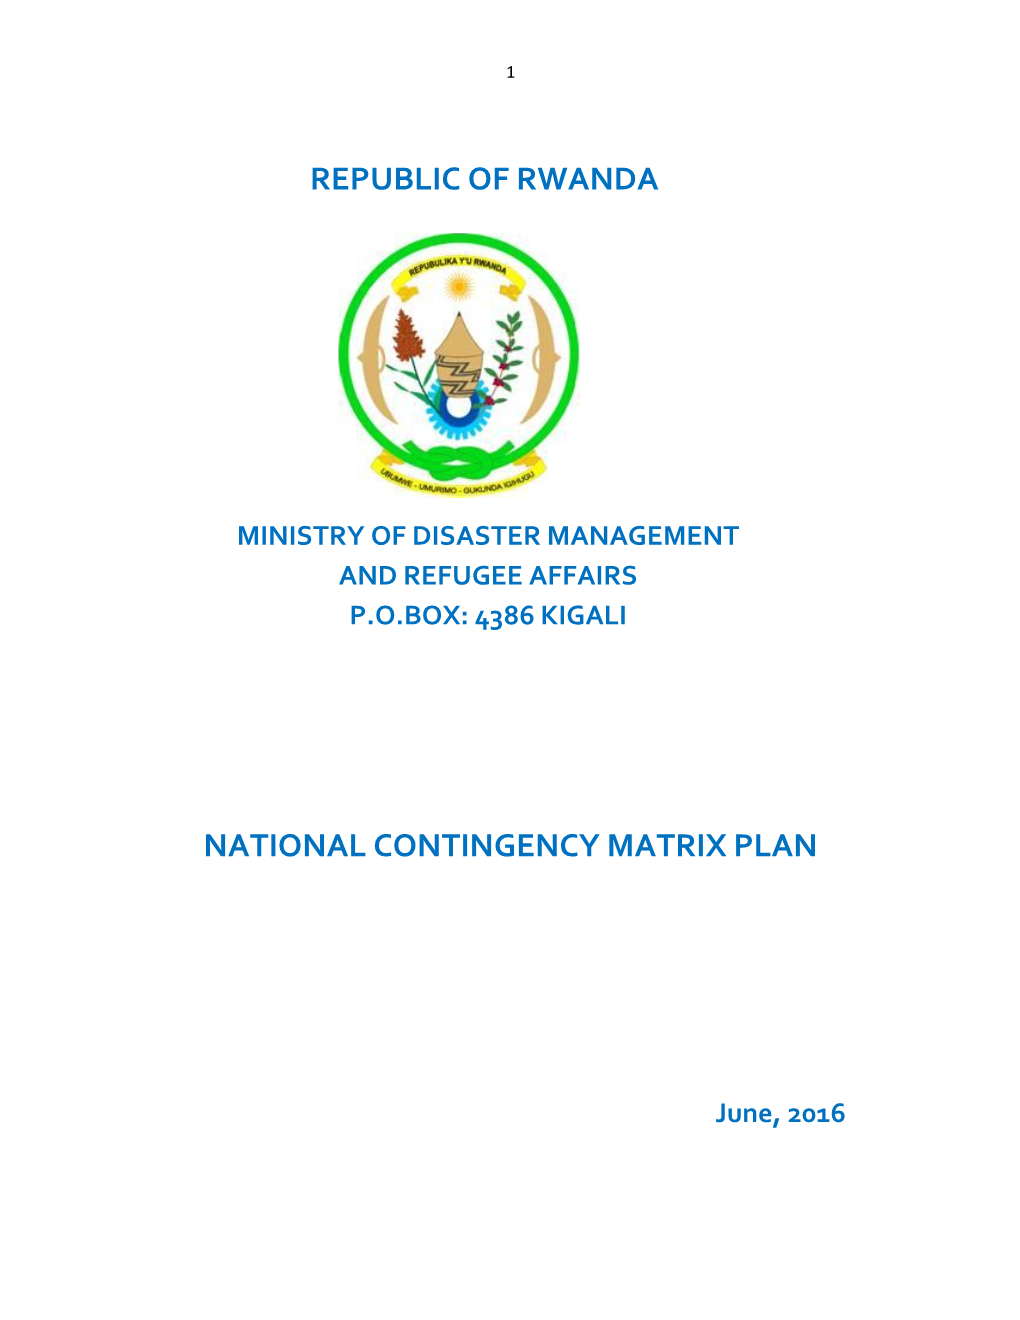 Republic of Rwanda National Contingency Matrix Plan